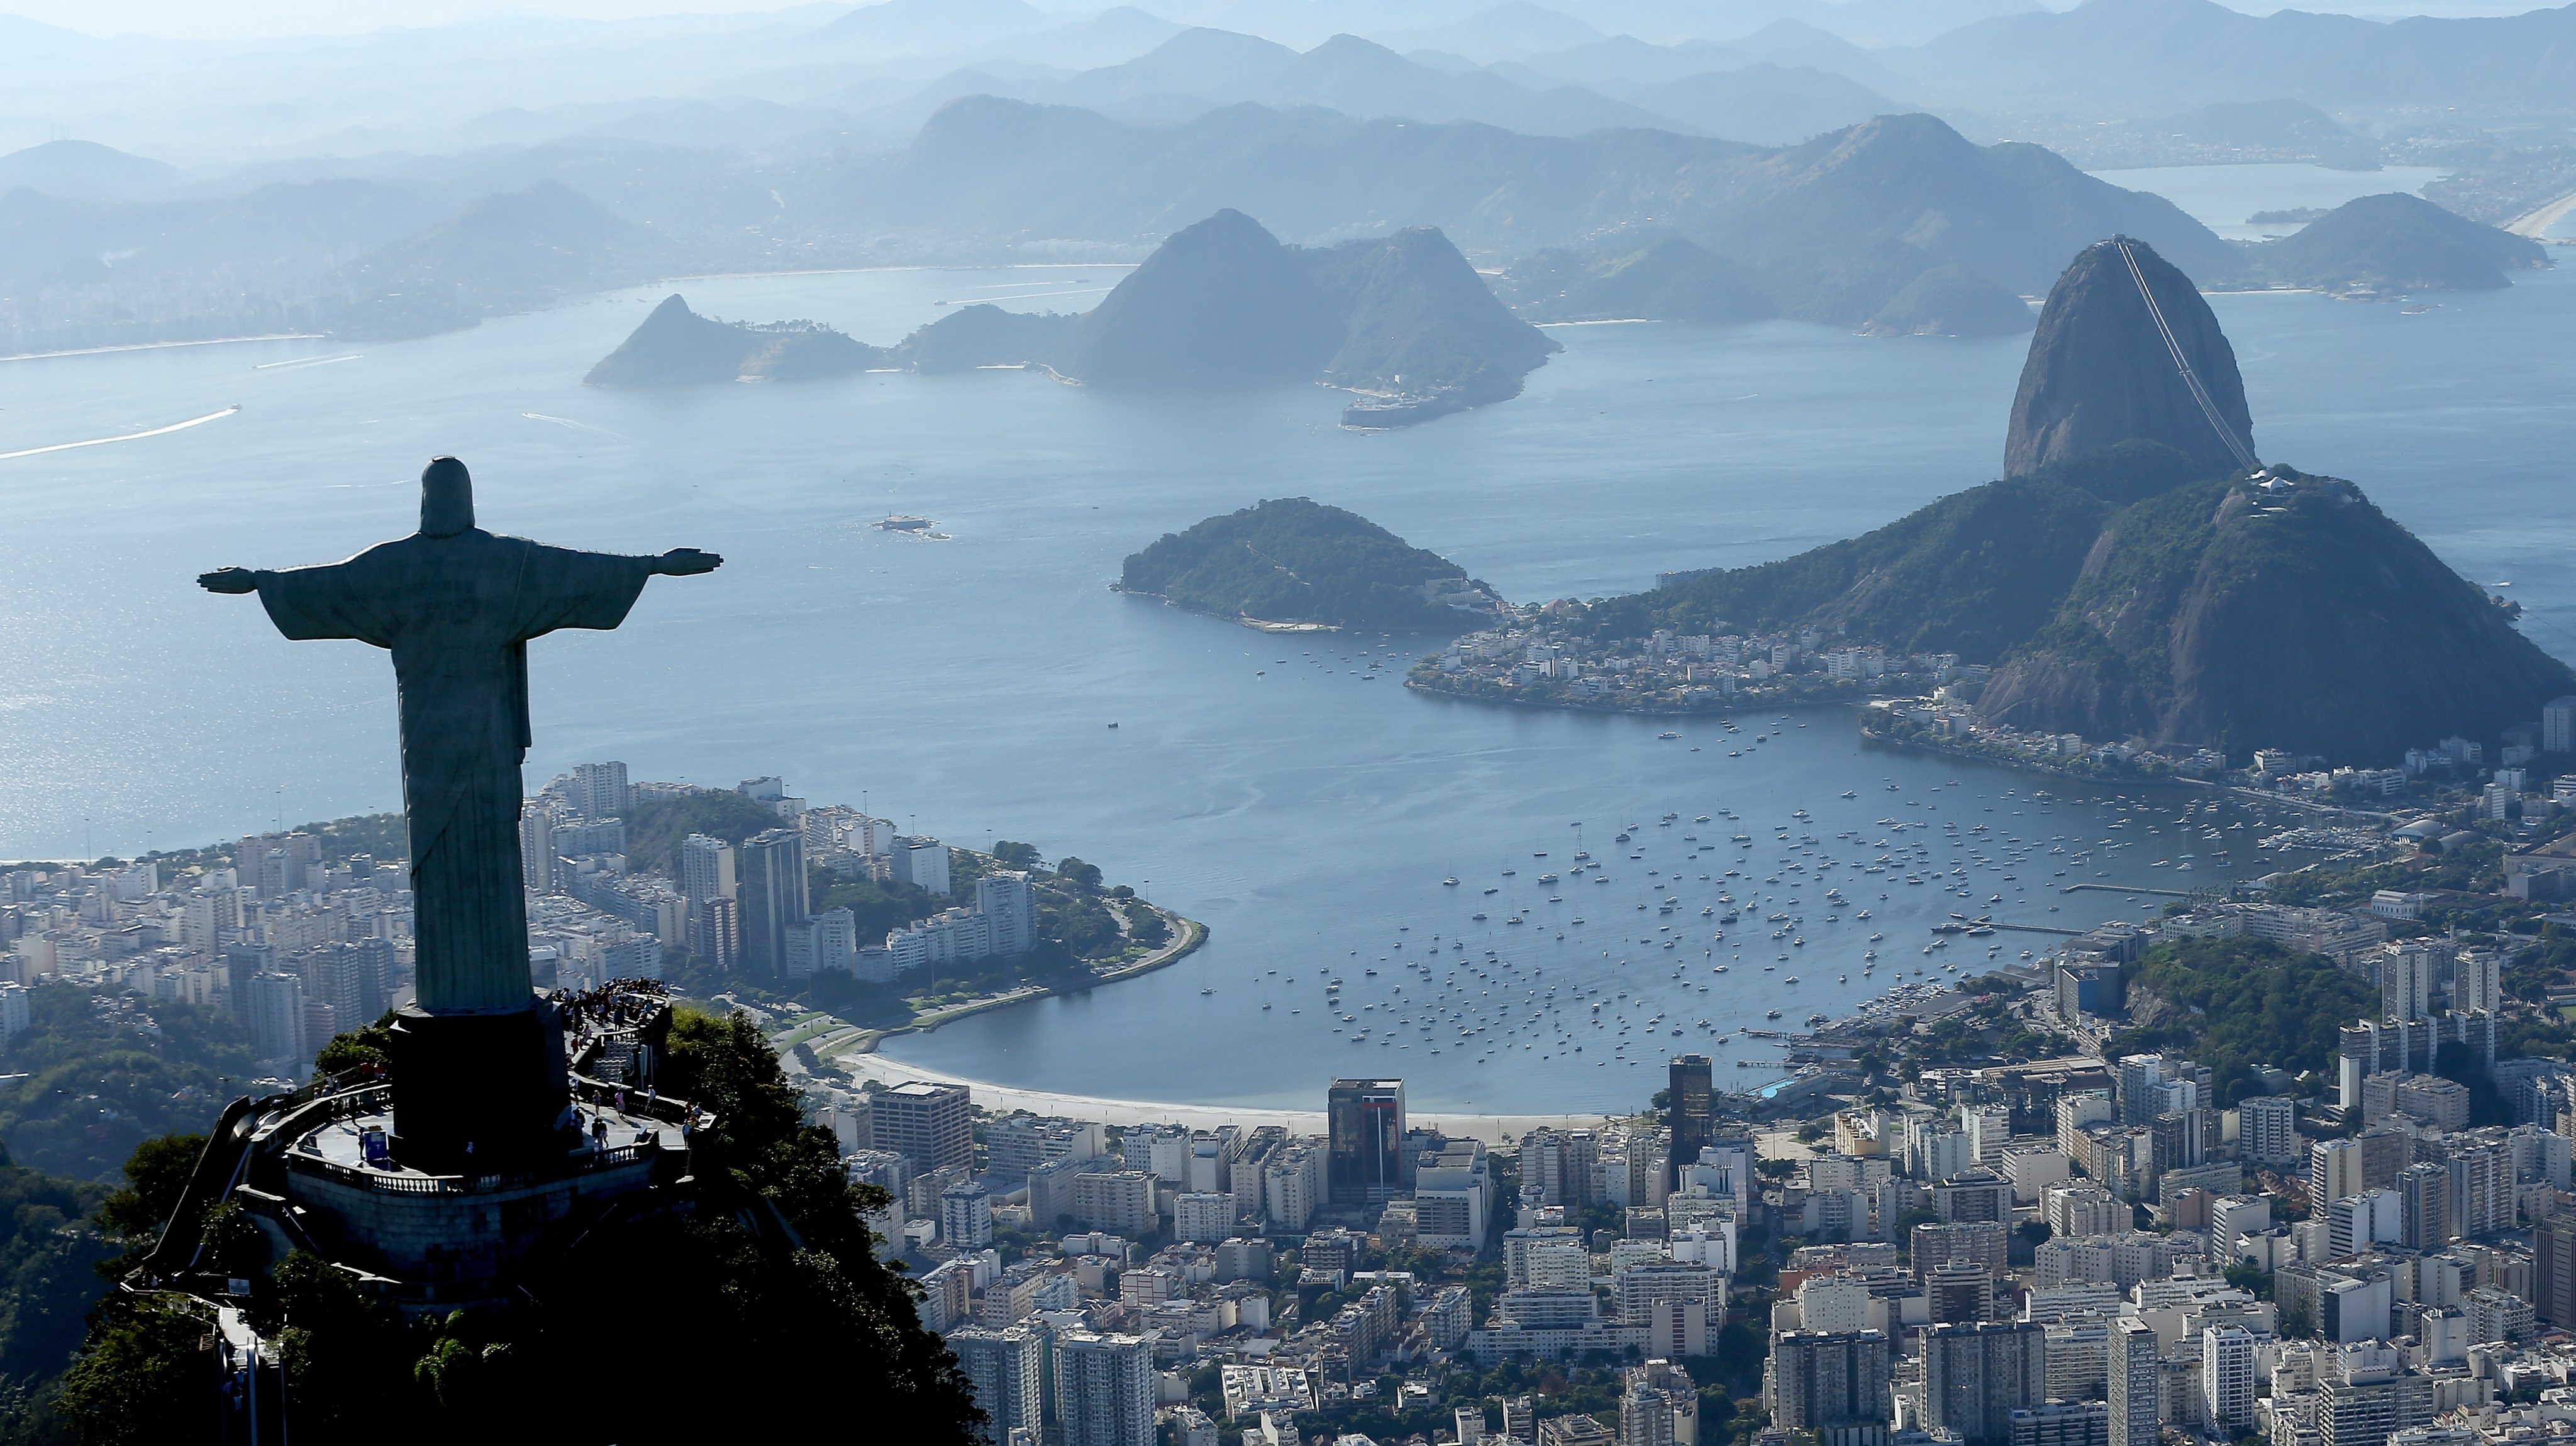 Rio 2016 Olympic Games Venues Construction in Progress